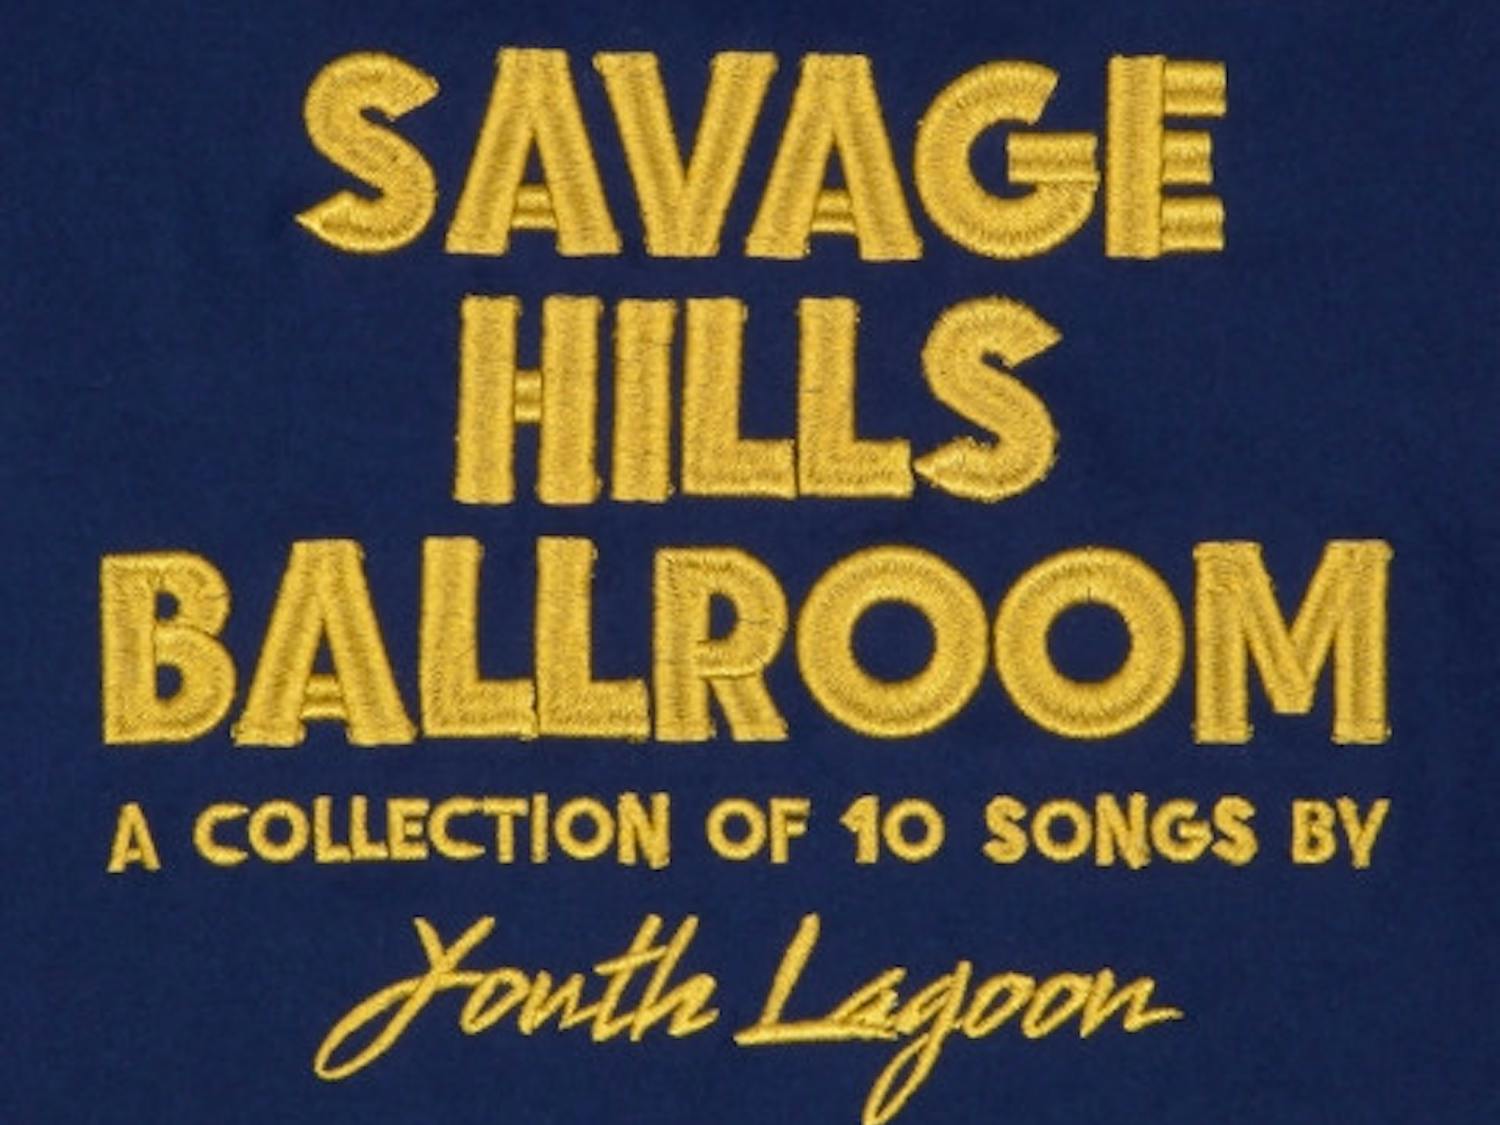 youth-lagoon-savage-hills-ballroom-1